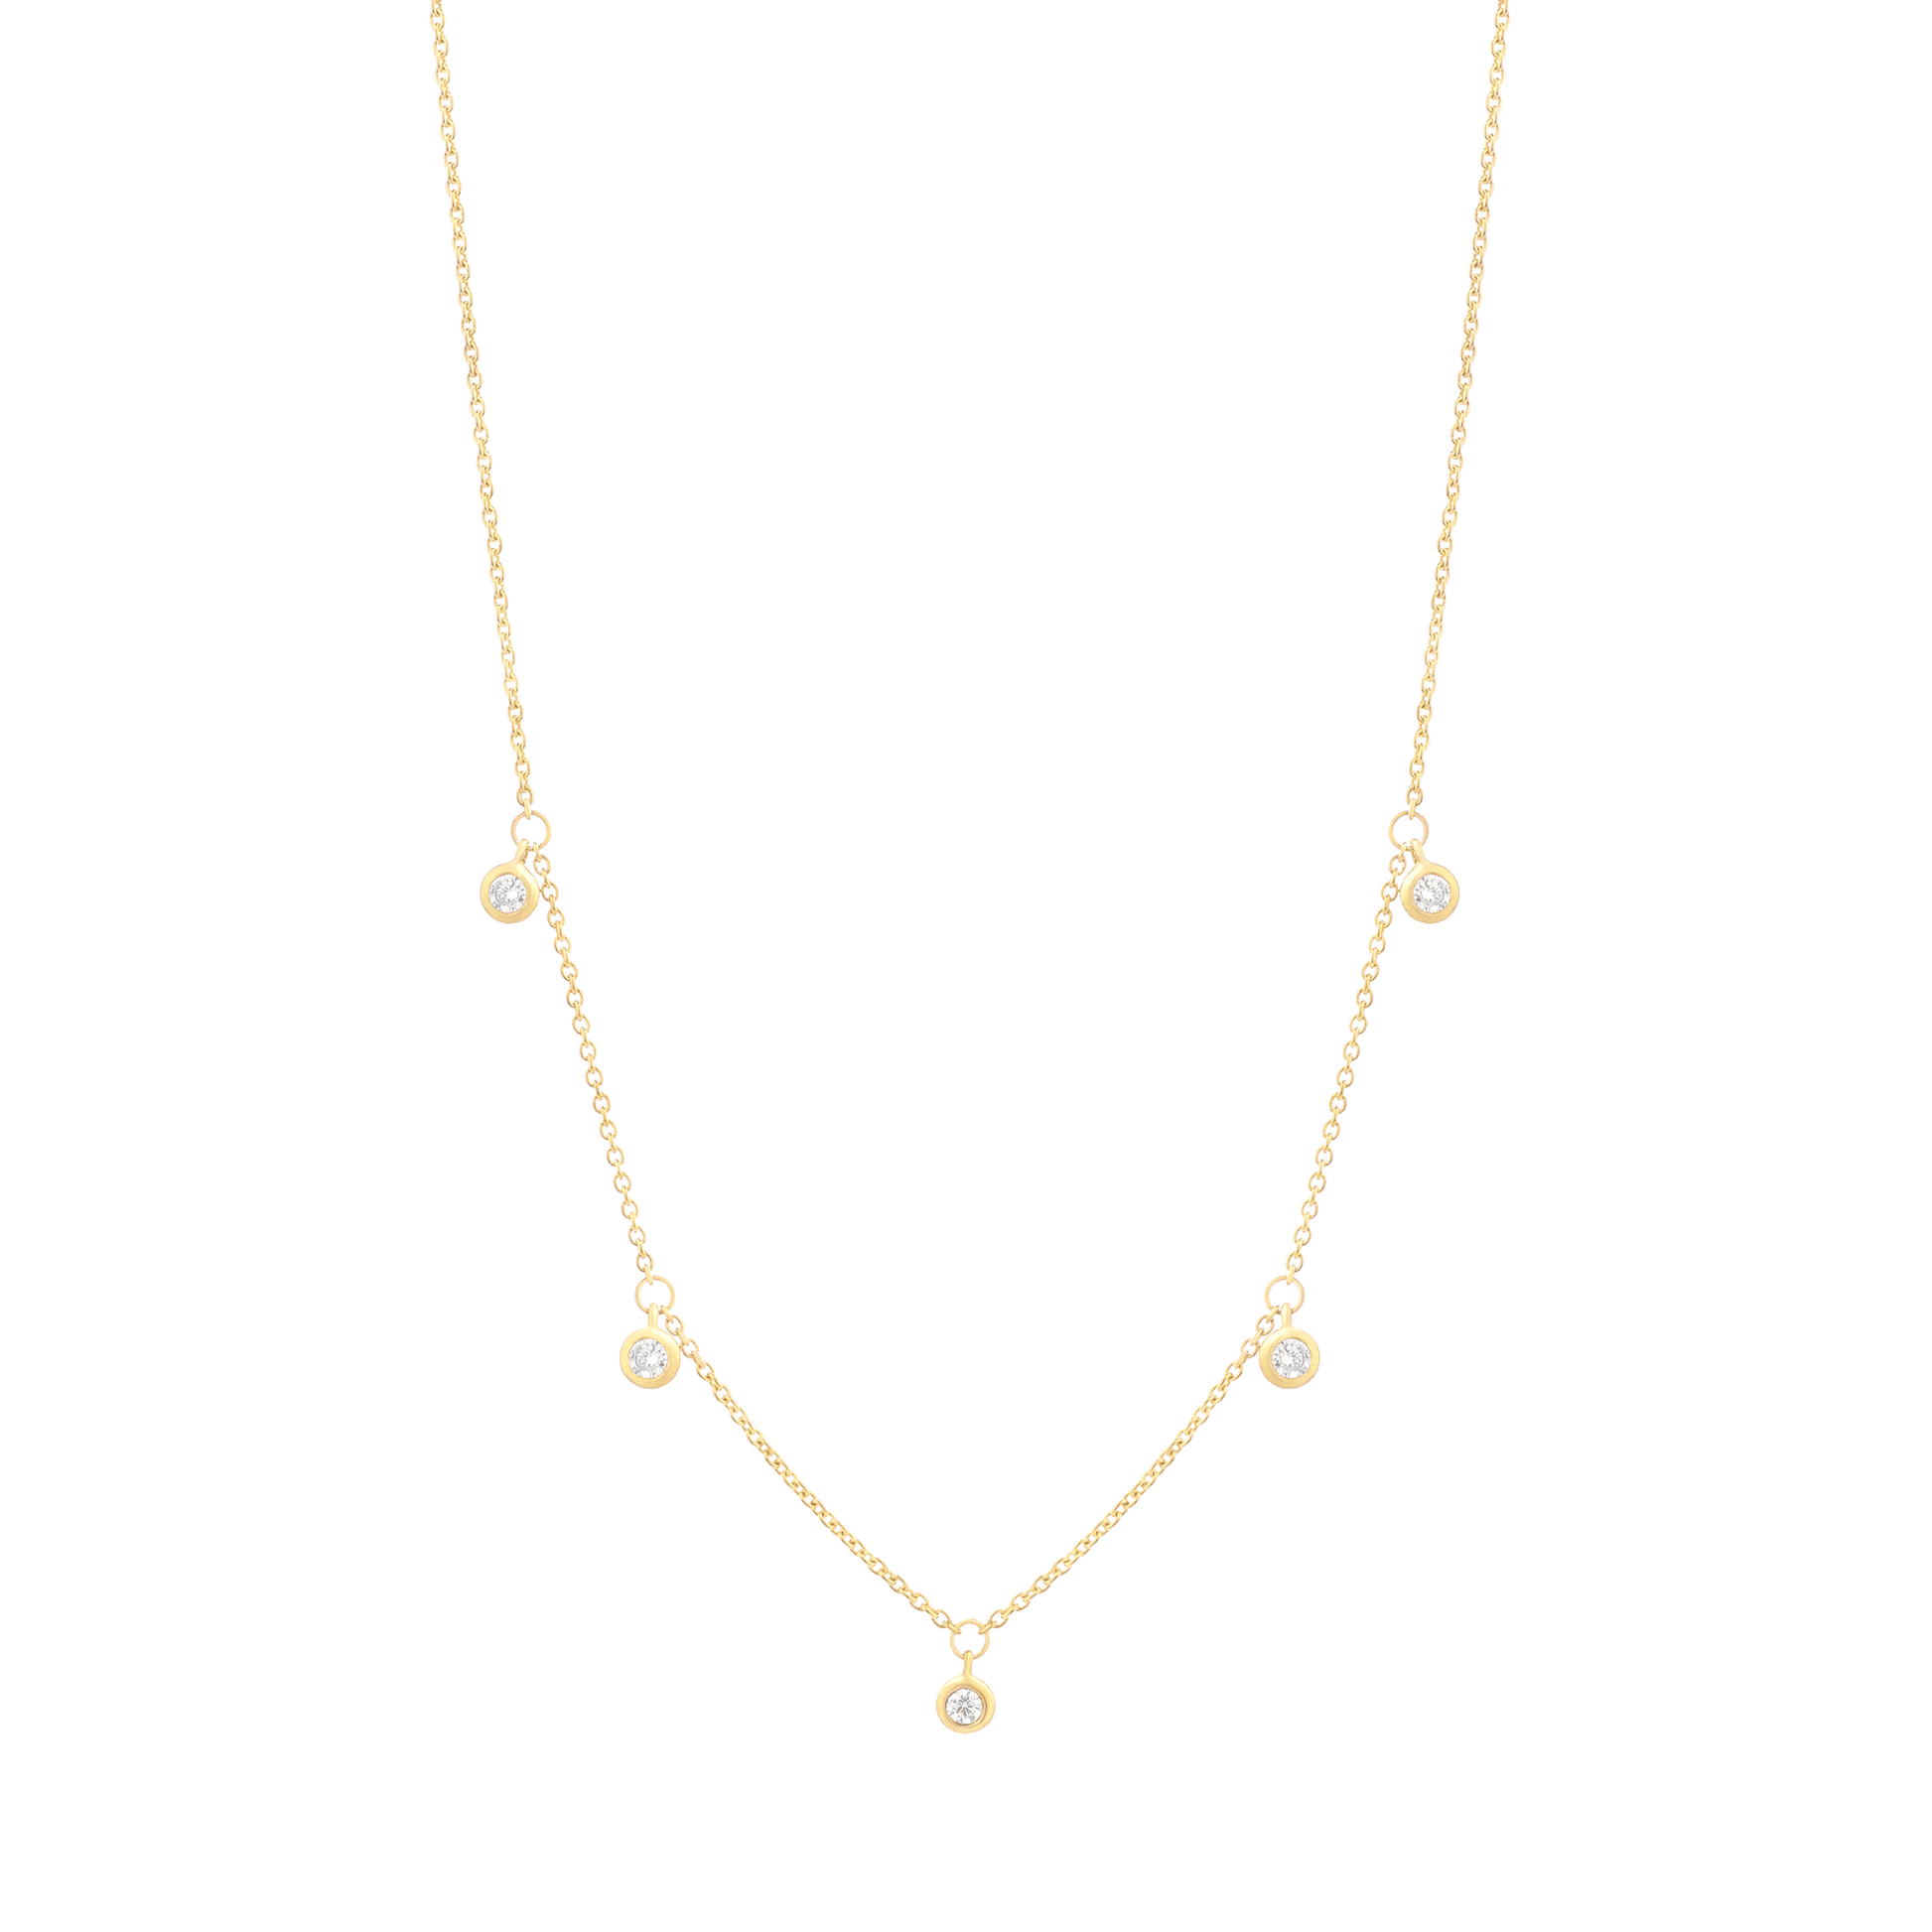 5 Diamonds Bezel Necklace - 925 Sterling Silver Necklaces magal-dev 